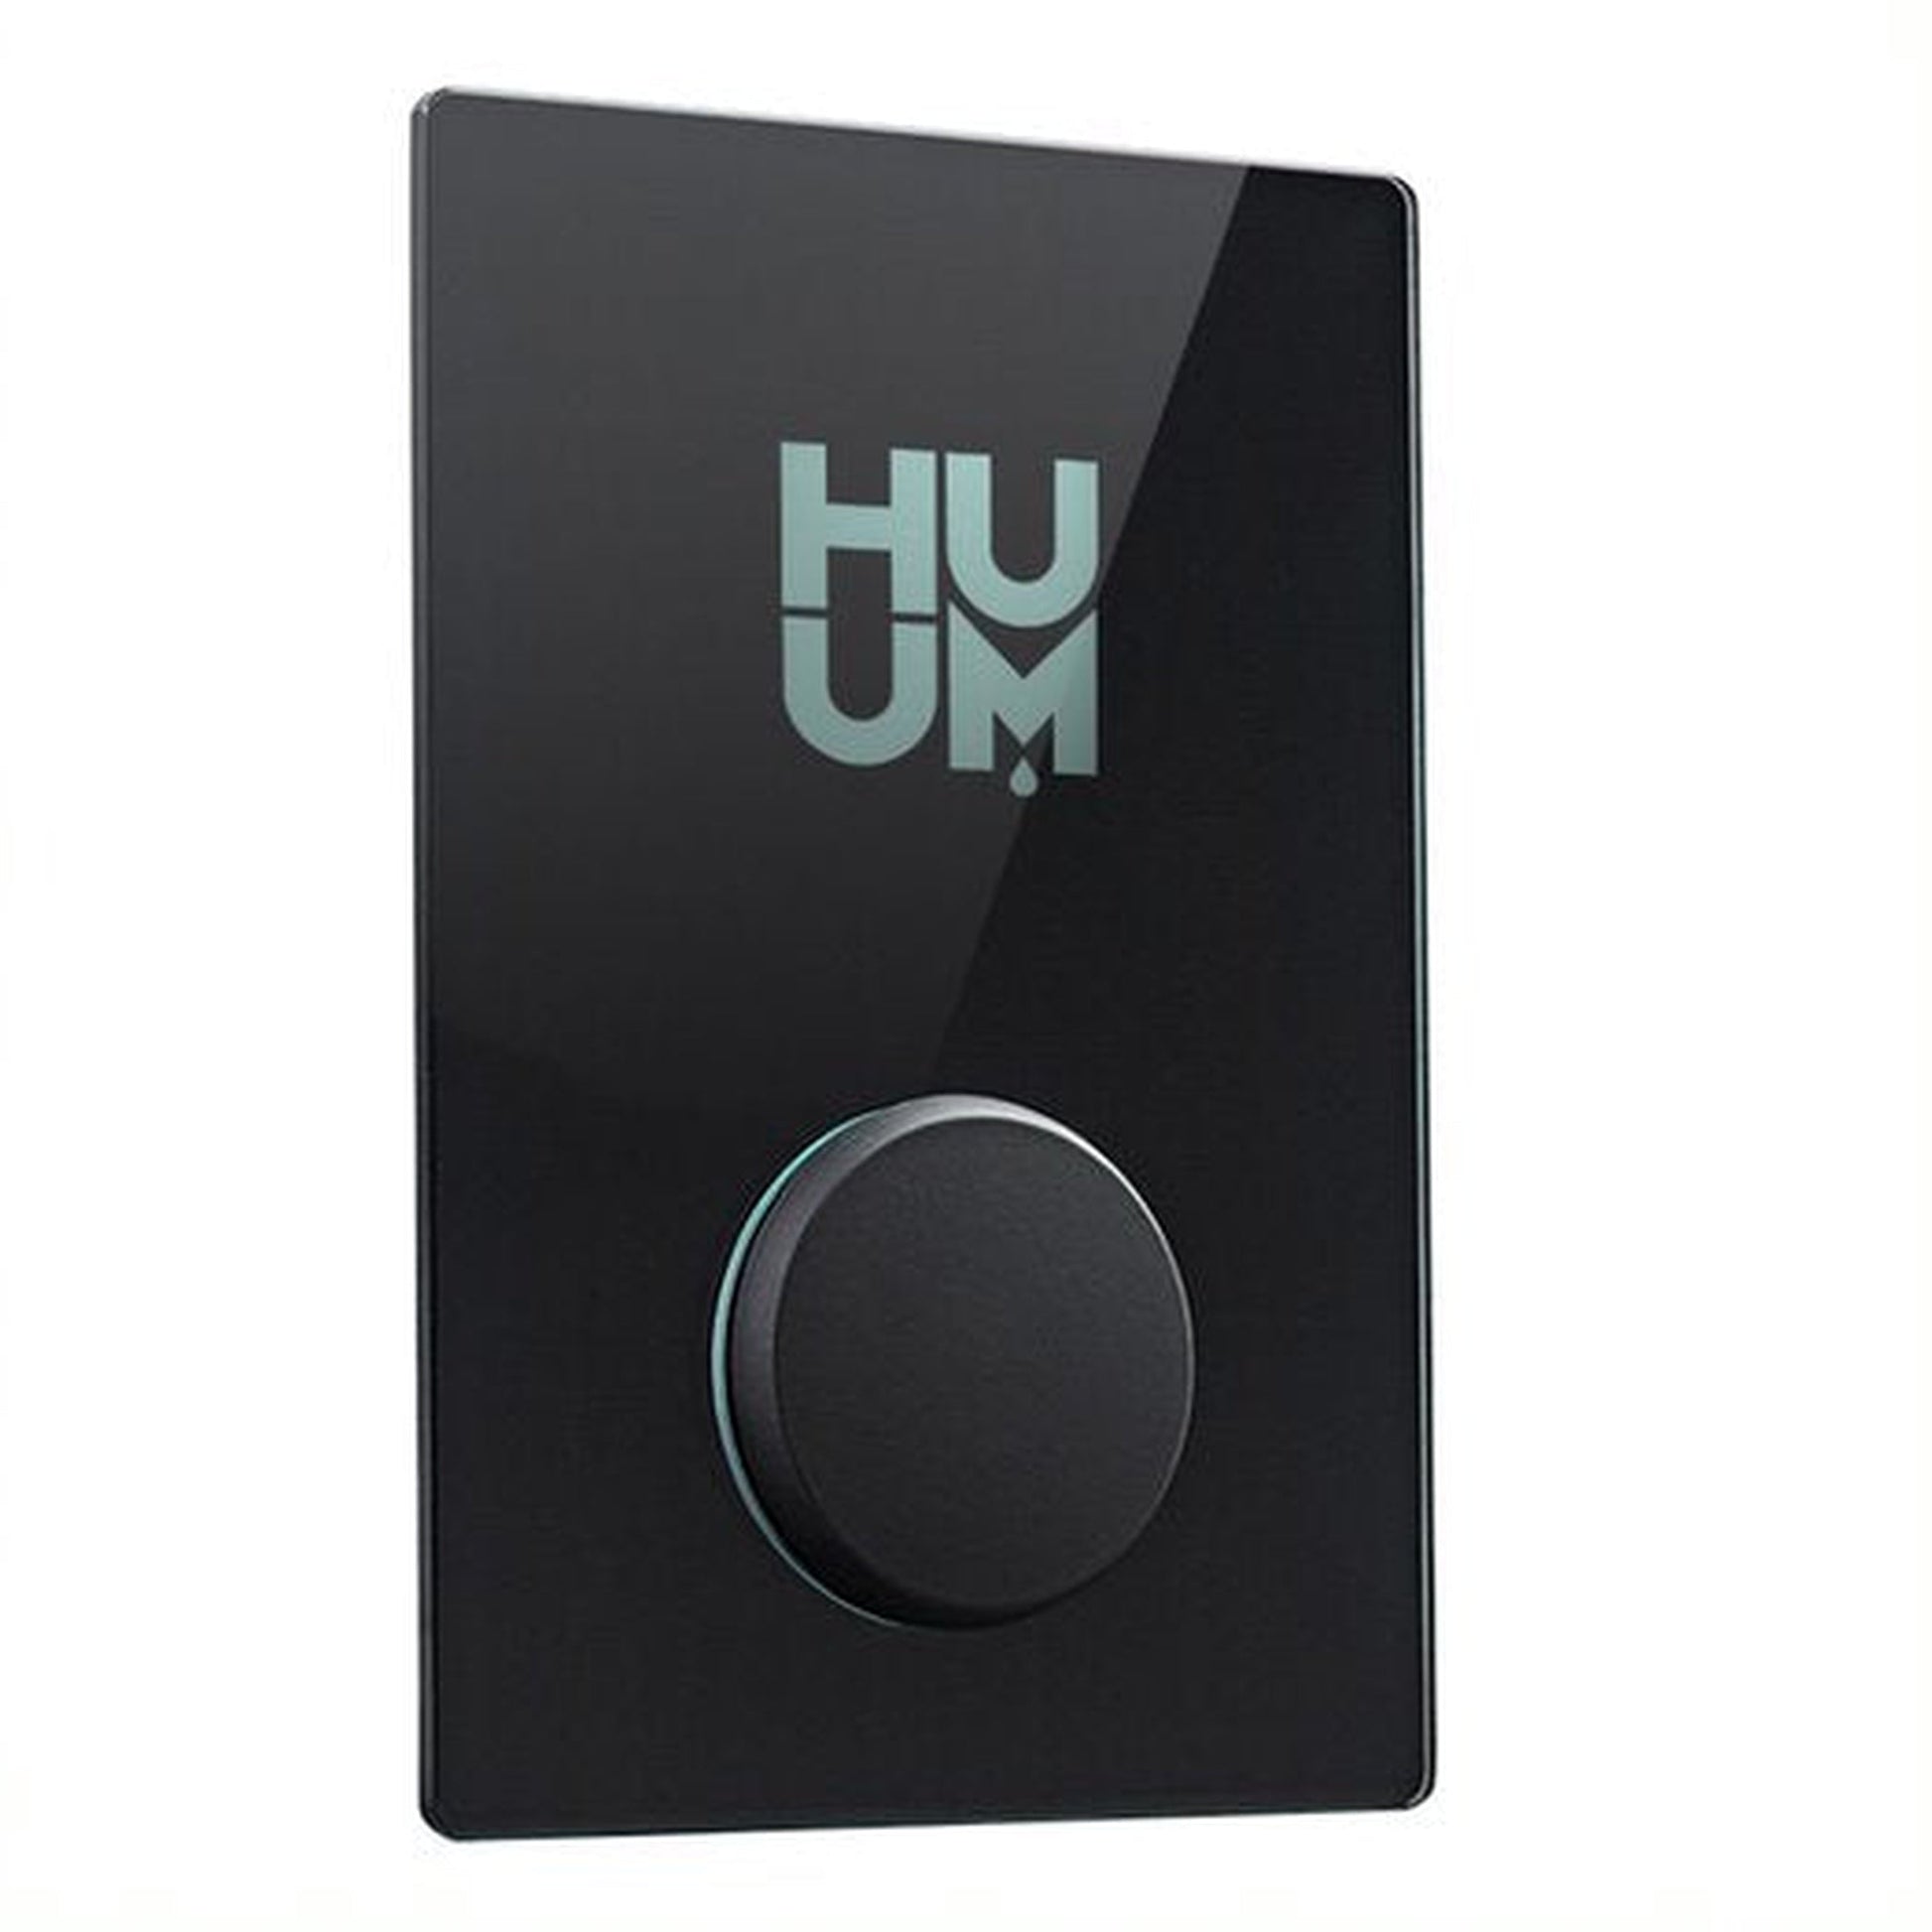 HUMM UKU WiFi 4" x 1" x 5" Digital On - Off, Time, Temperature Controller For Sauna Heater